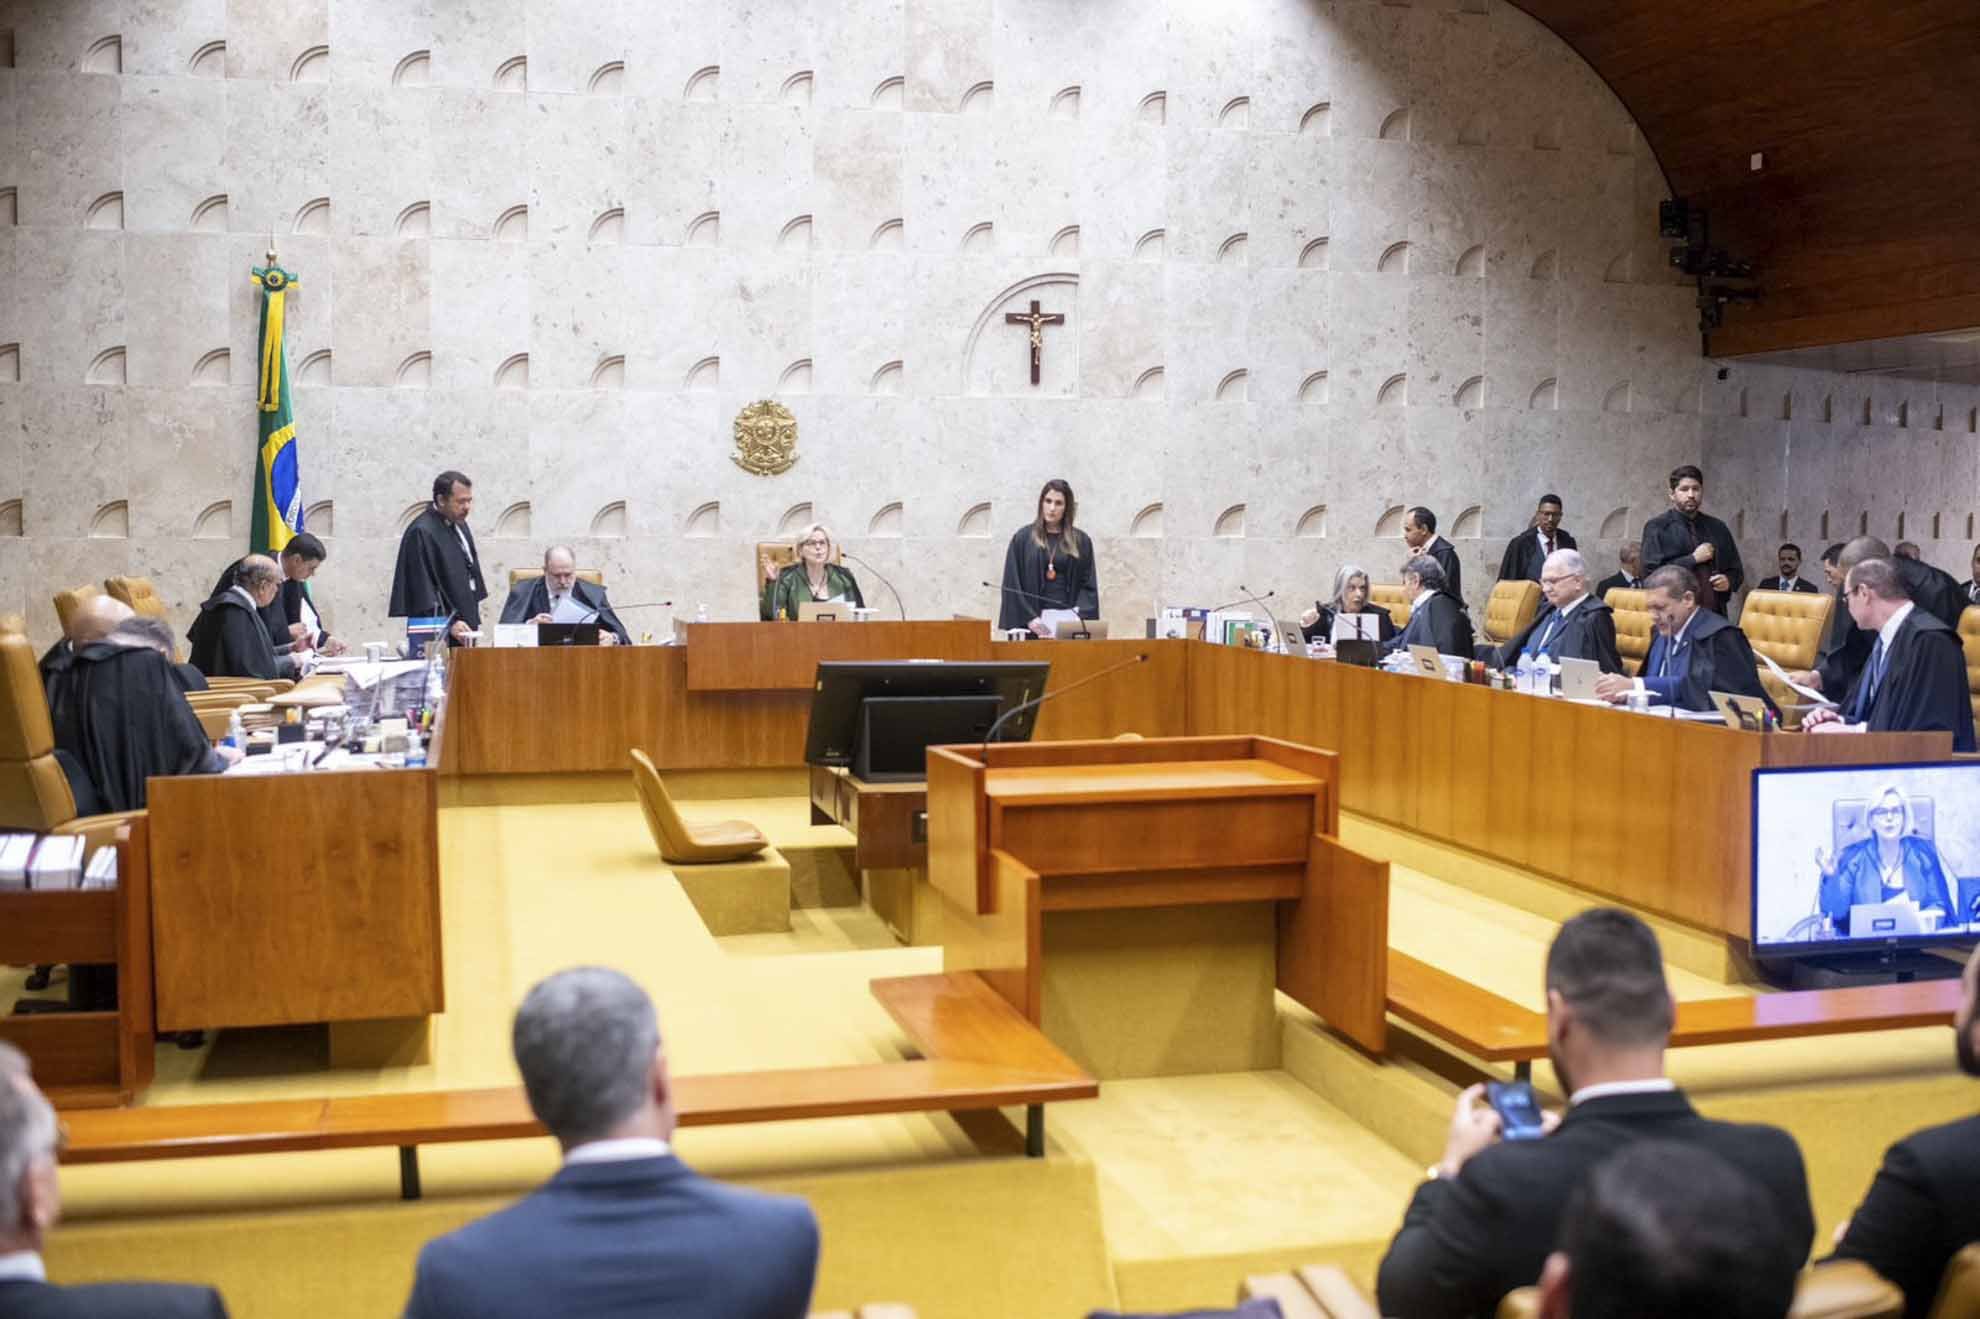 Supremo Tribunal Federal, STF, retoma análise do Marco Temporal indígenas brasil terras 11